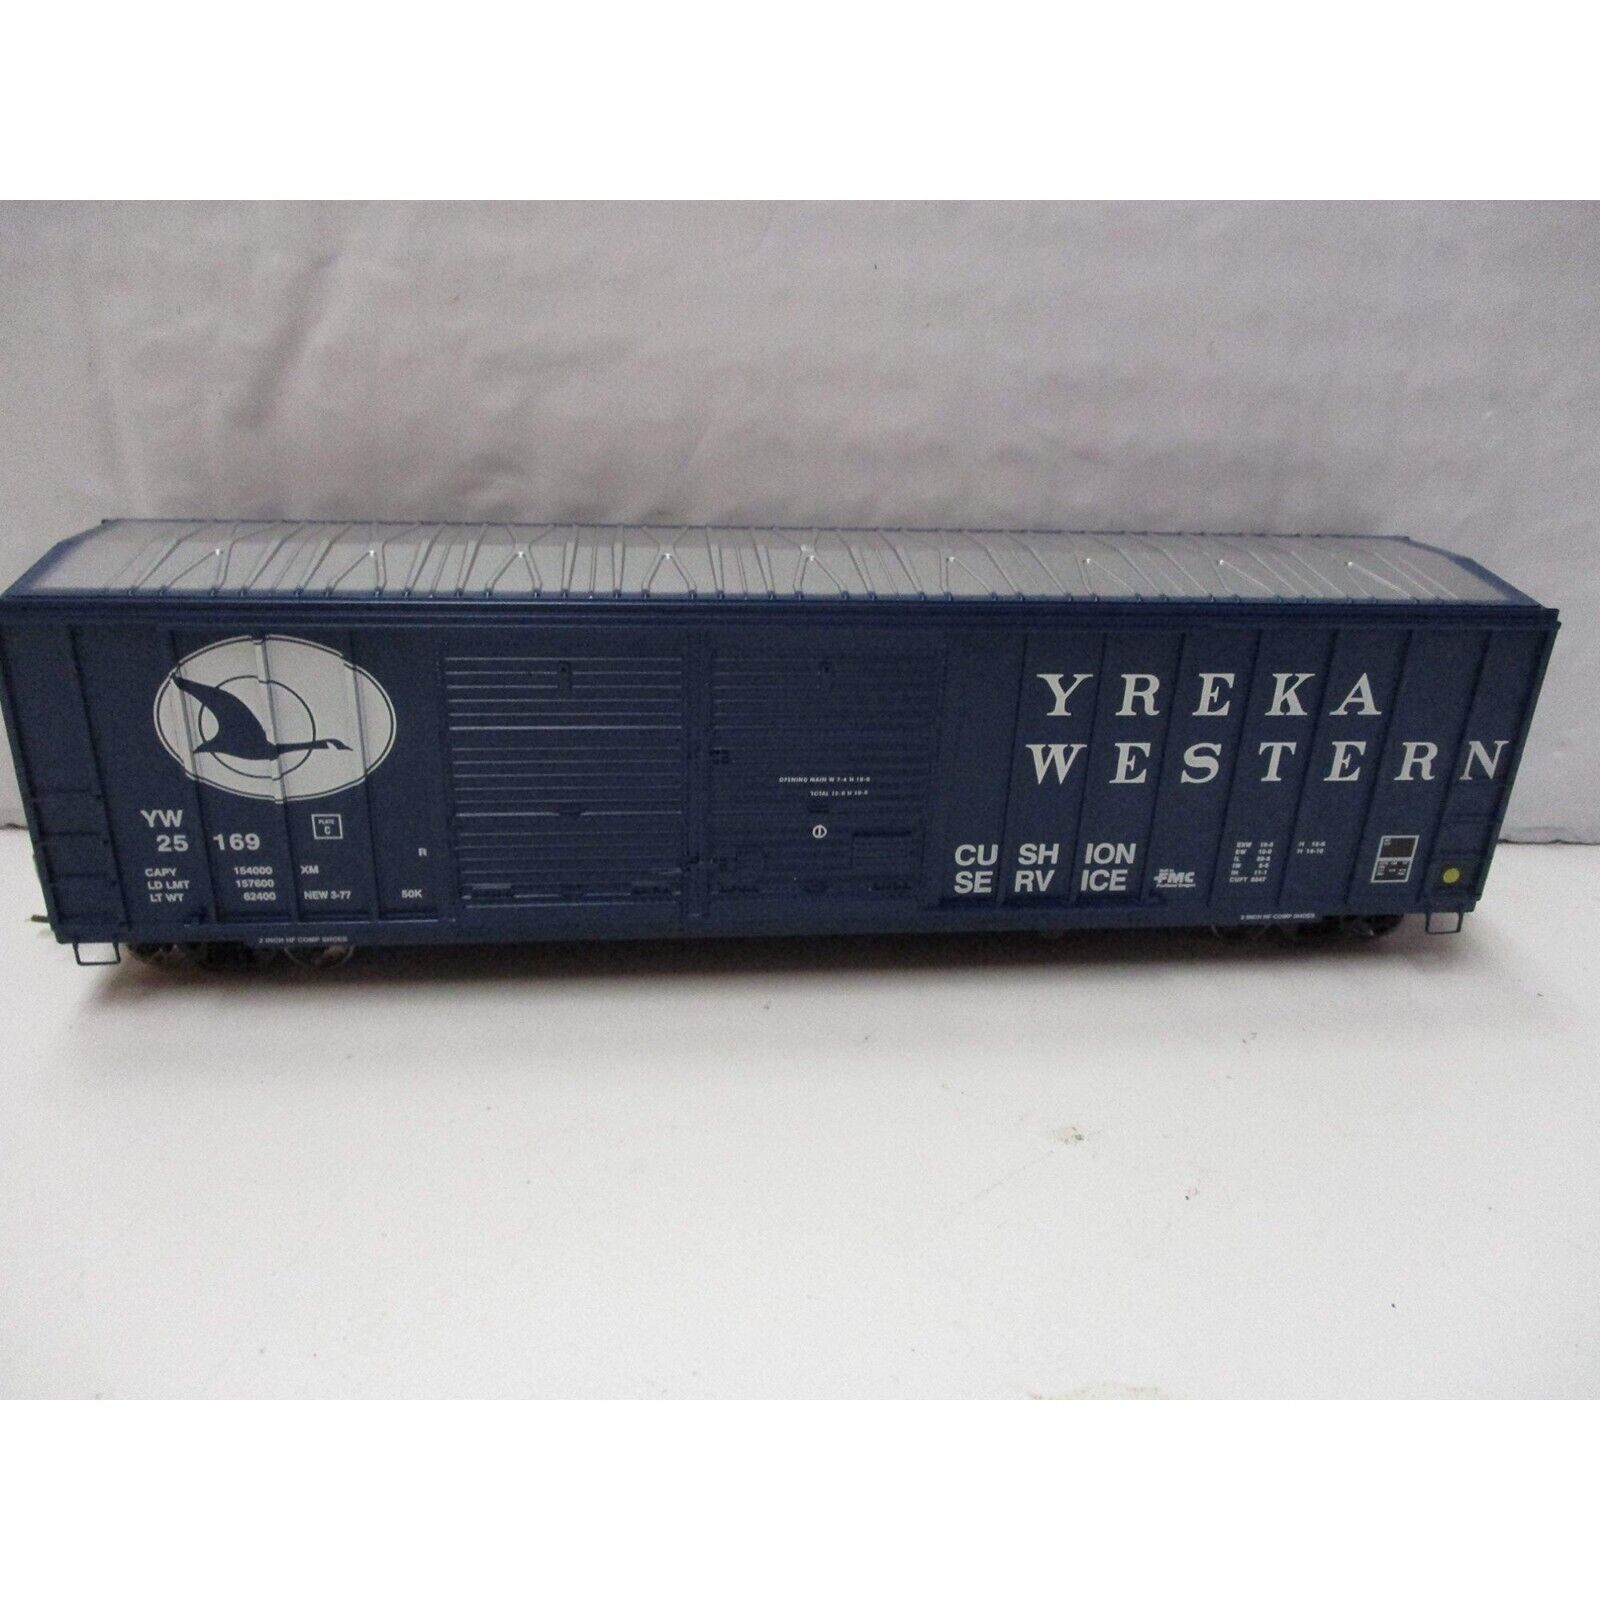 Primary image for Athearn Plastic Model 50' FMC Offset DD Box Car Yreka Western #25169